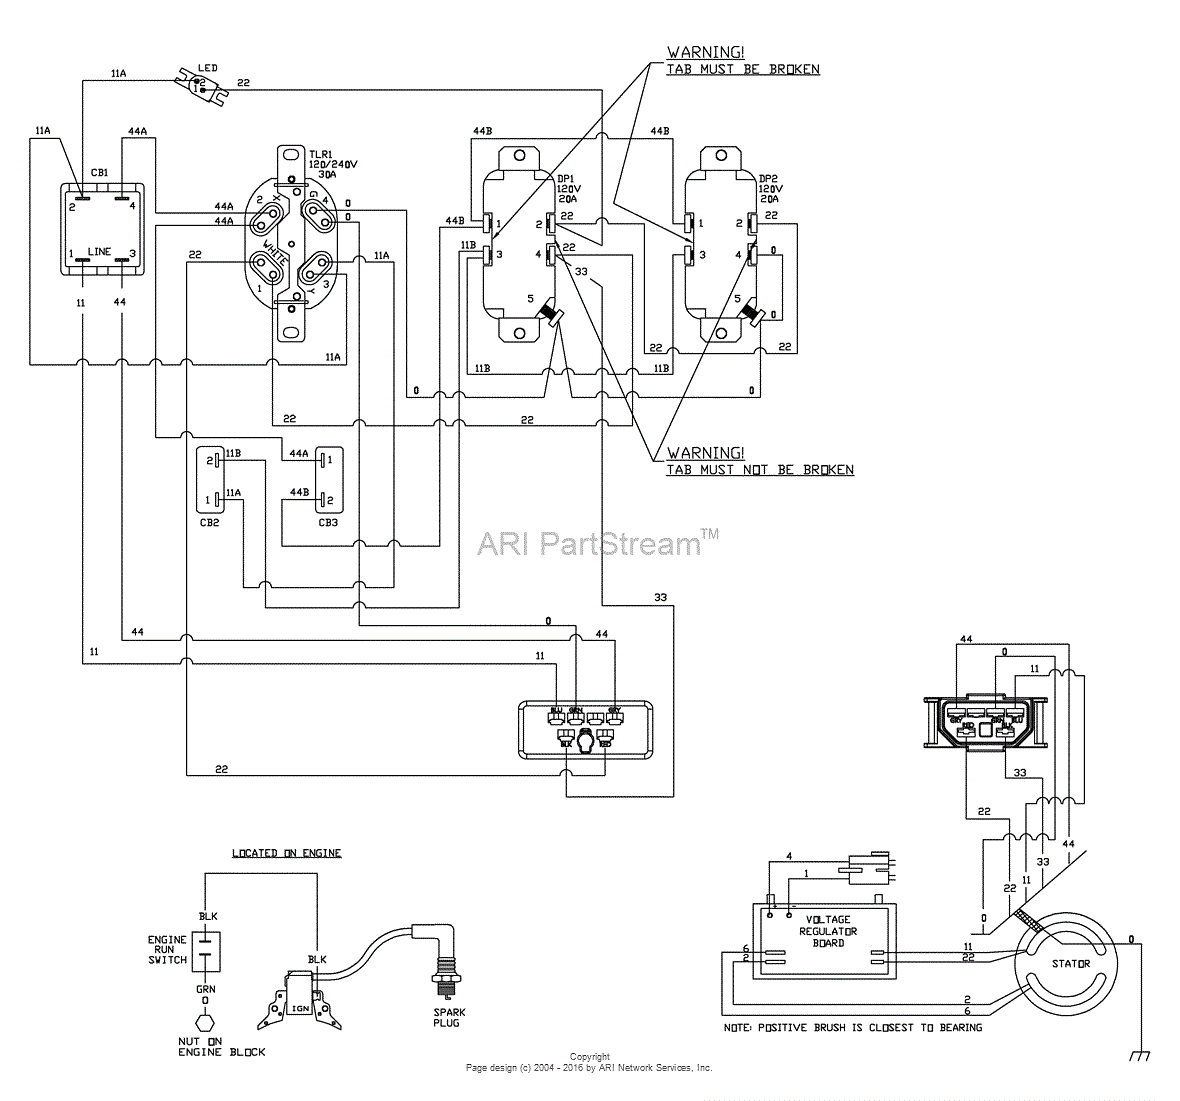 John Deere Parts Diagram For Wiring